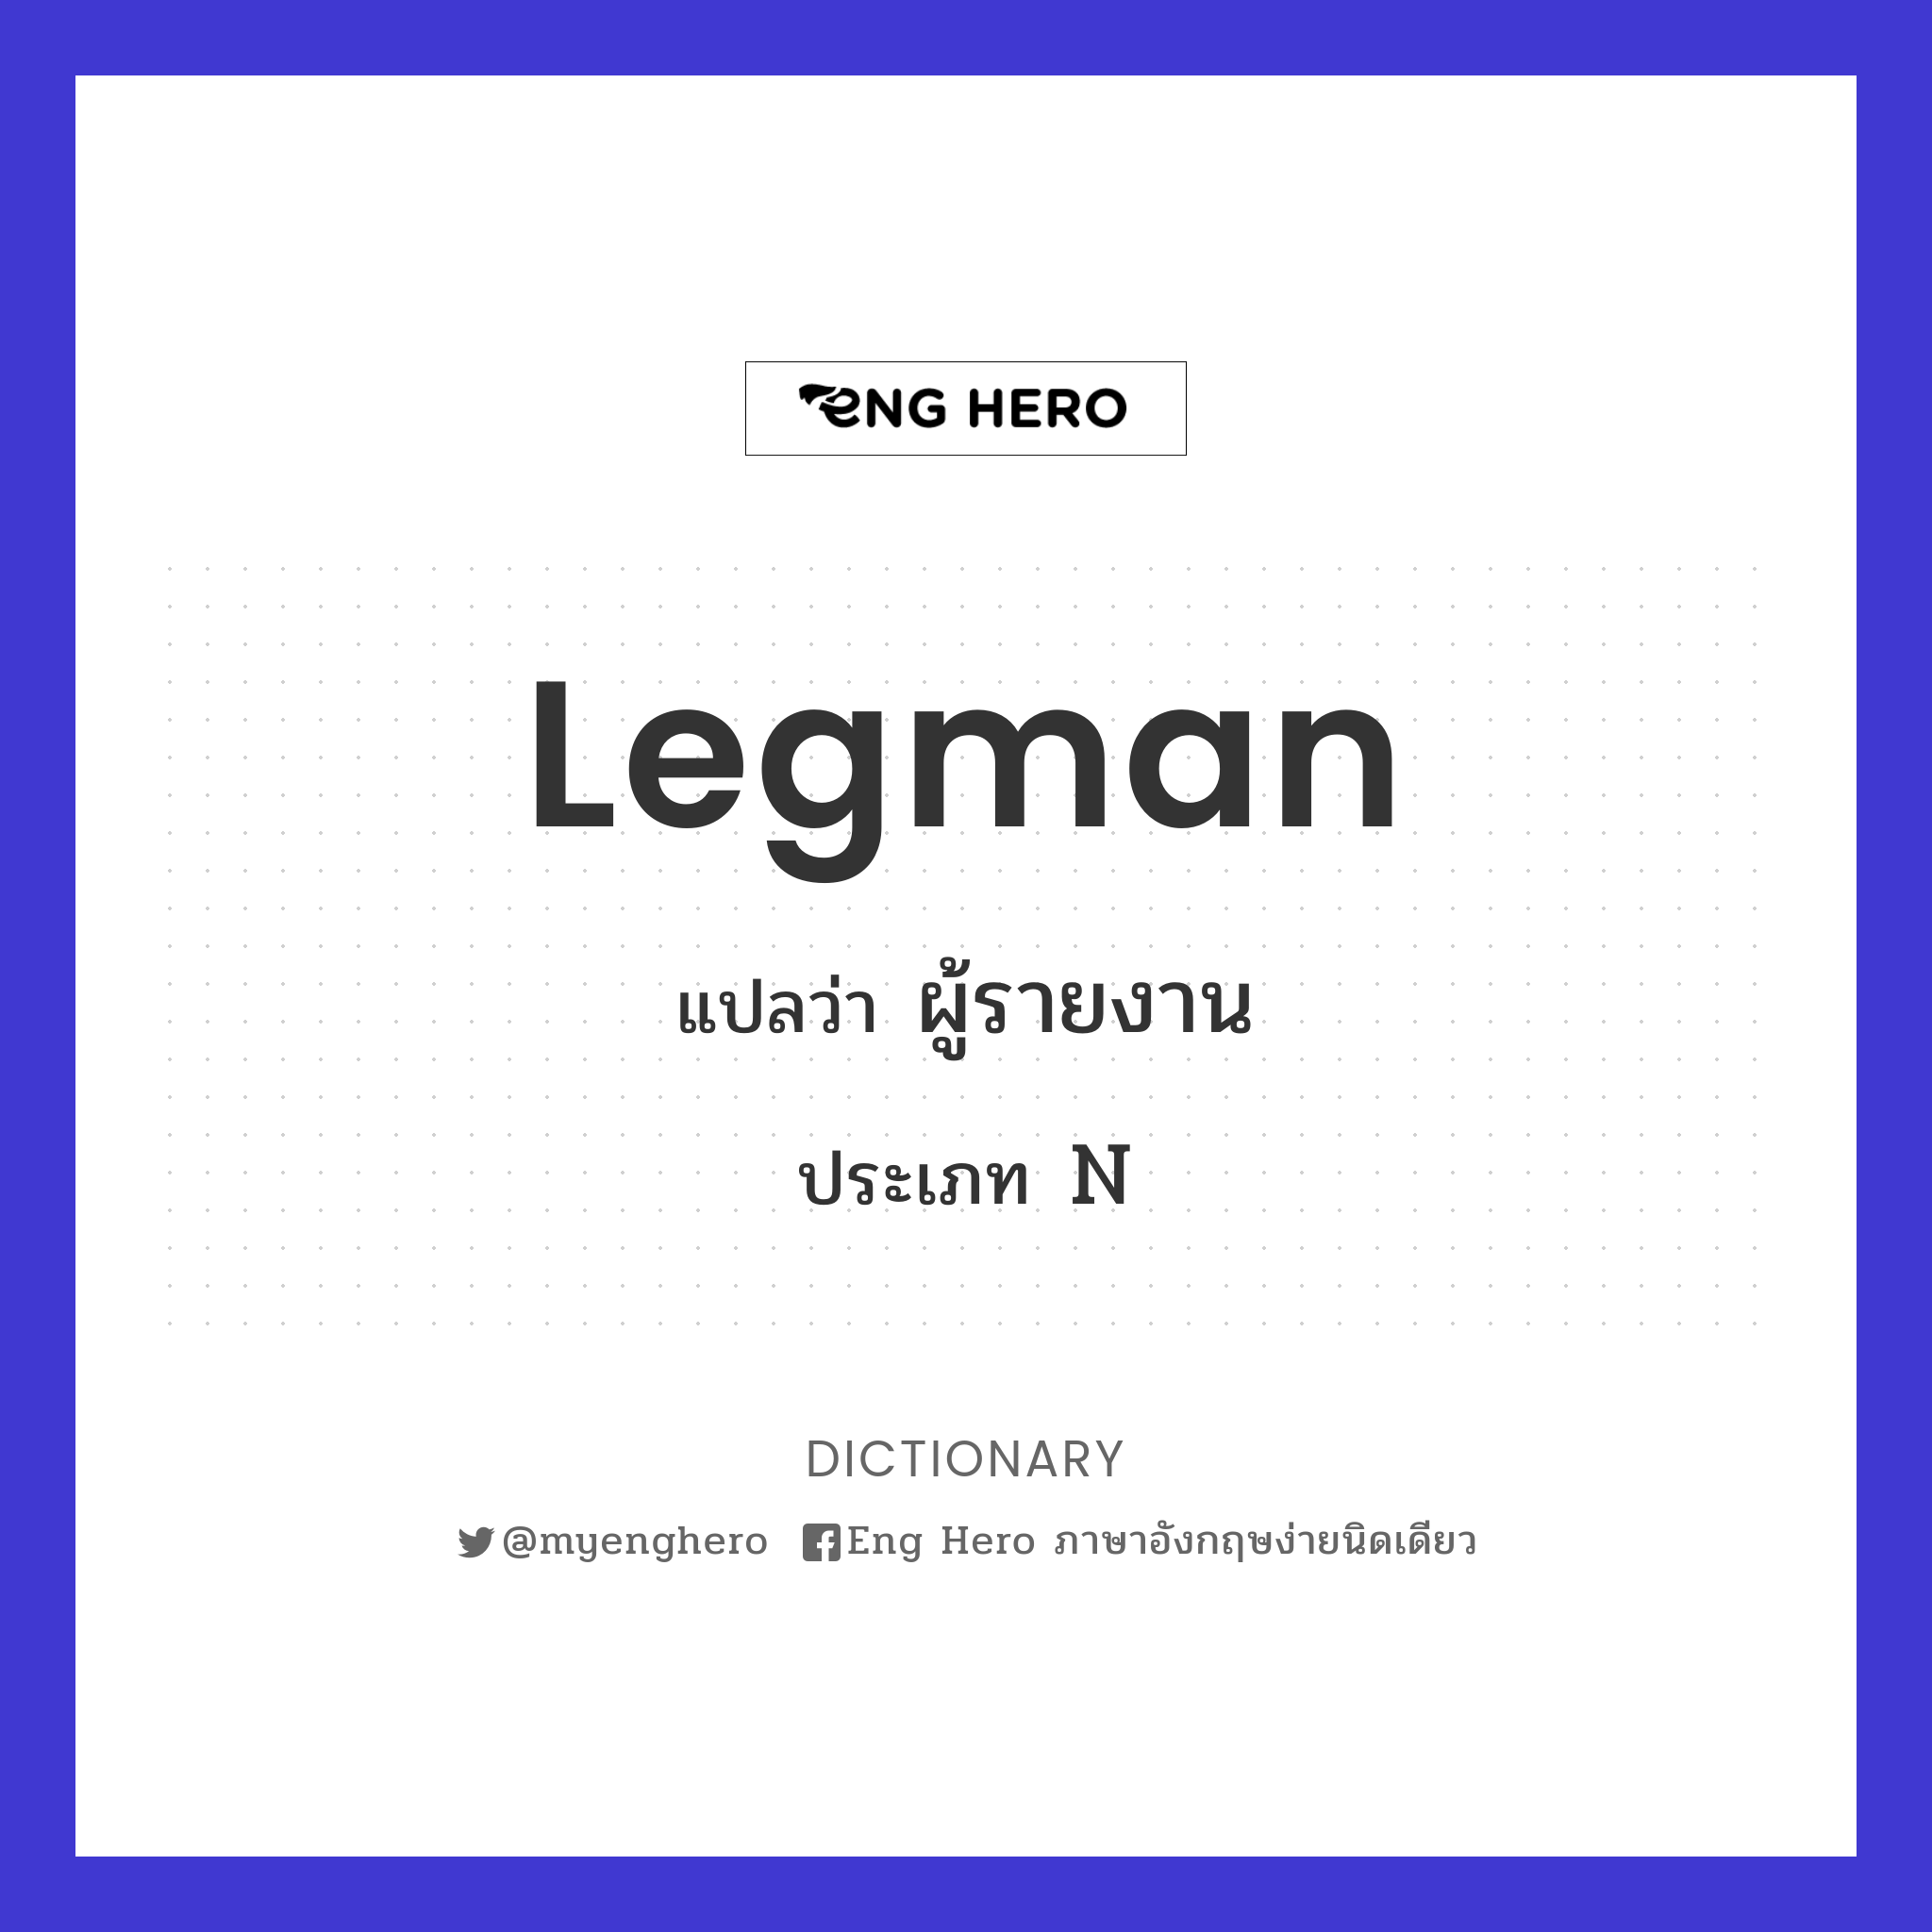 legman